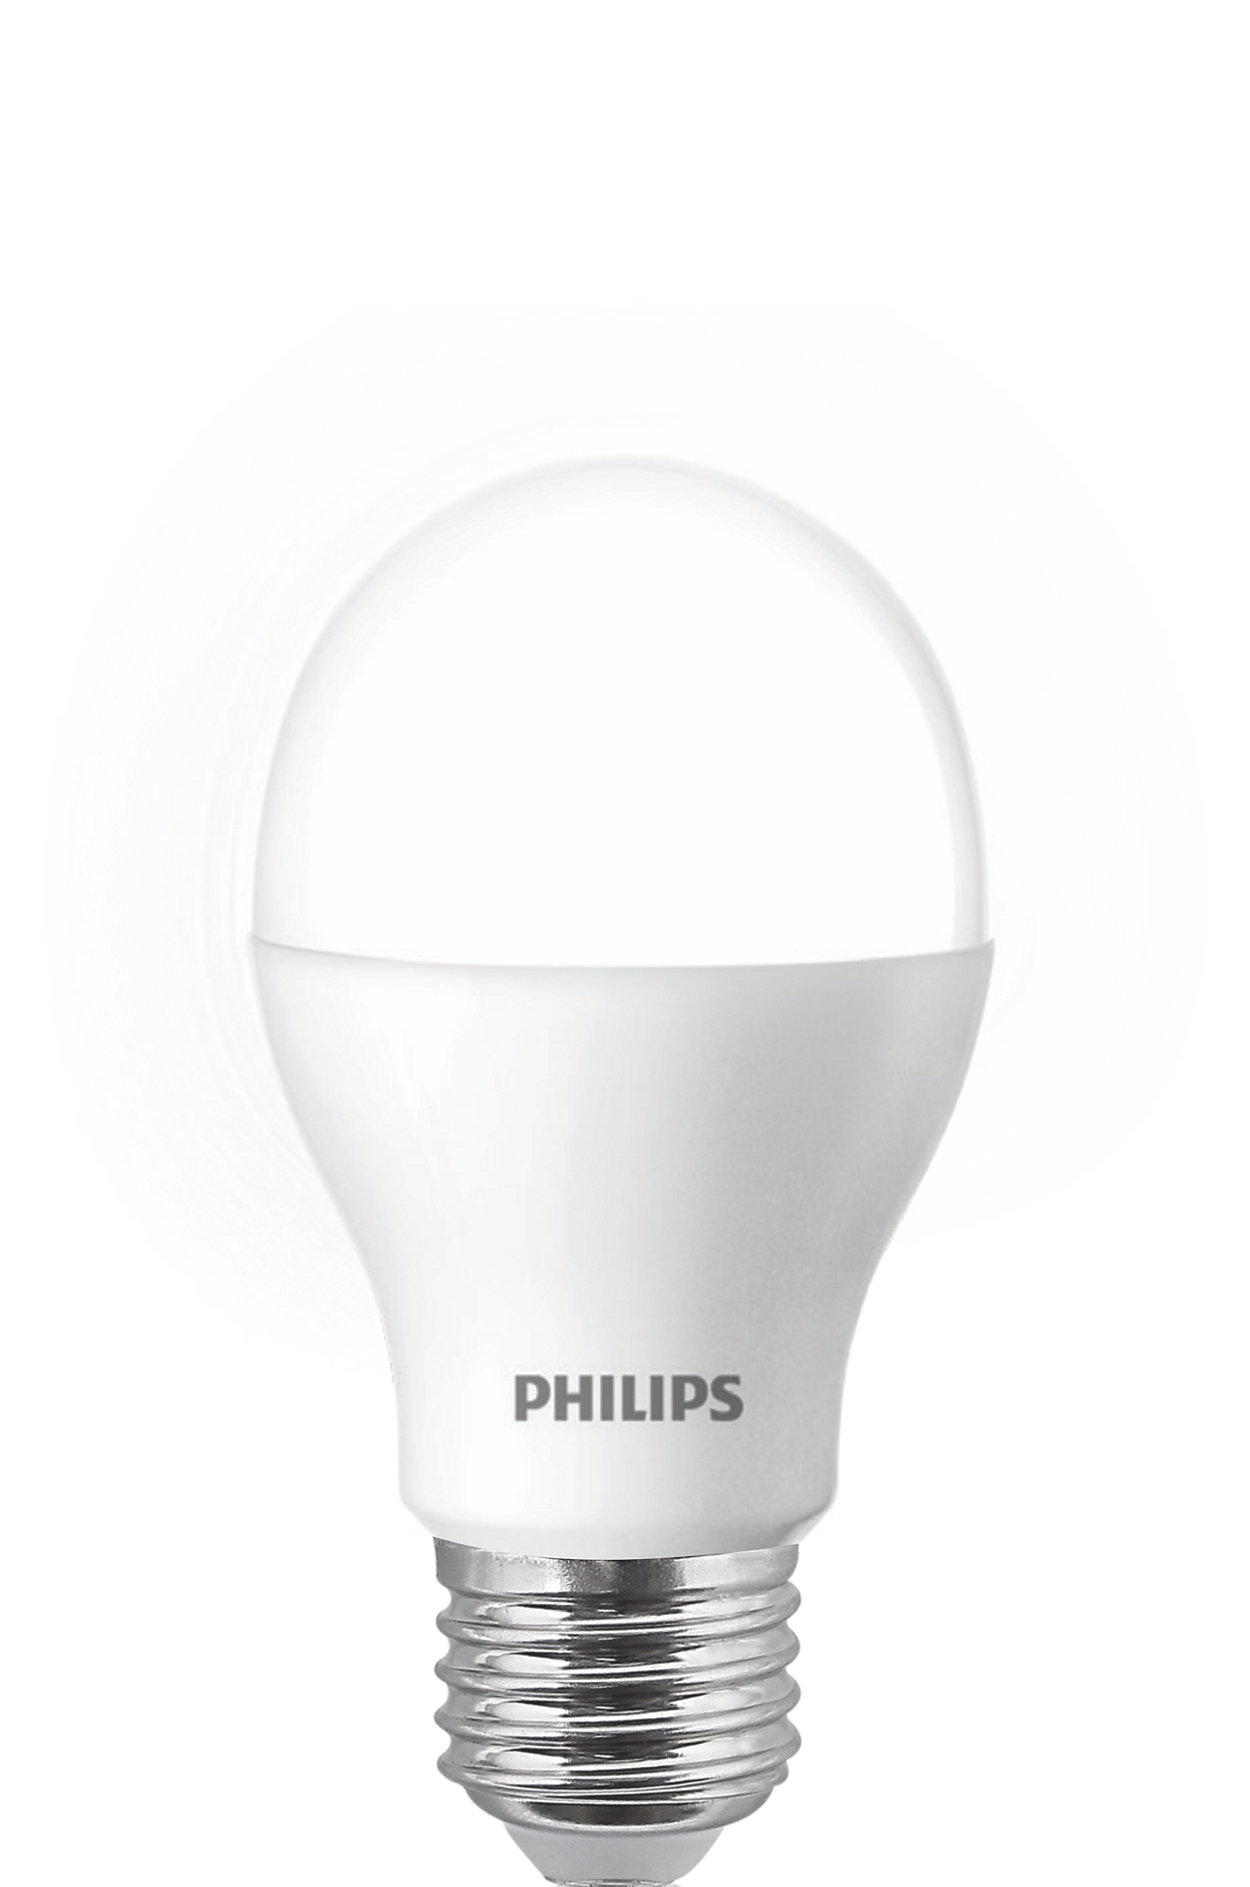 Experience warm white LED light